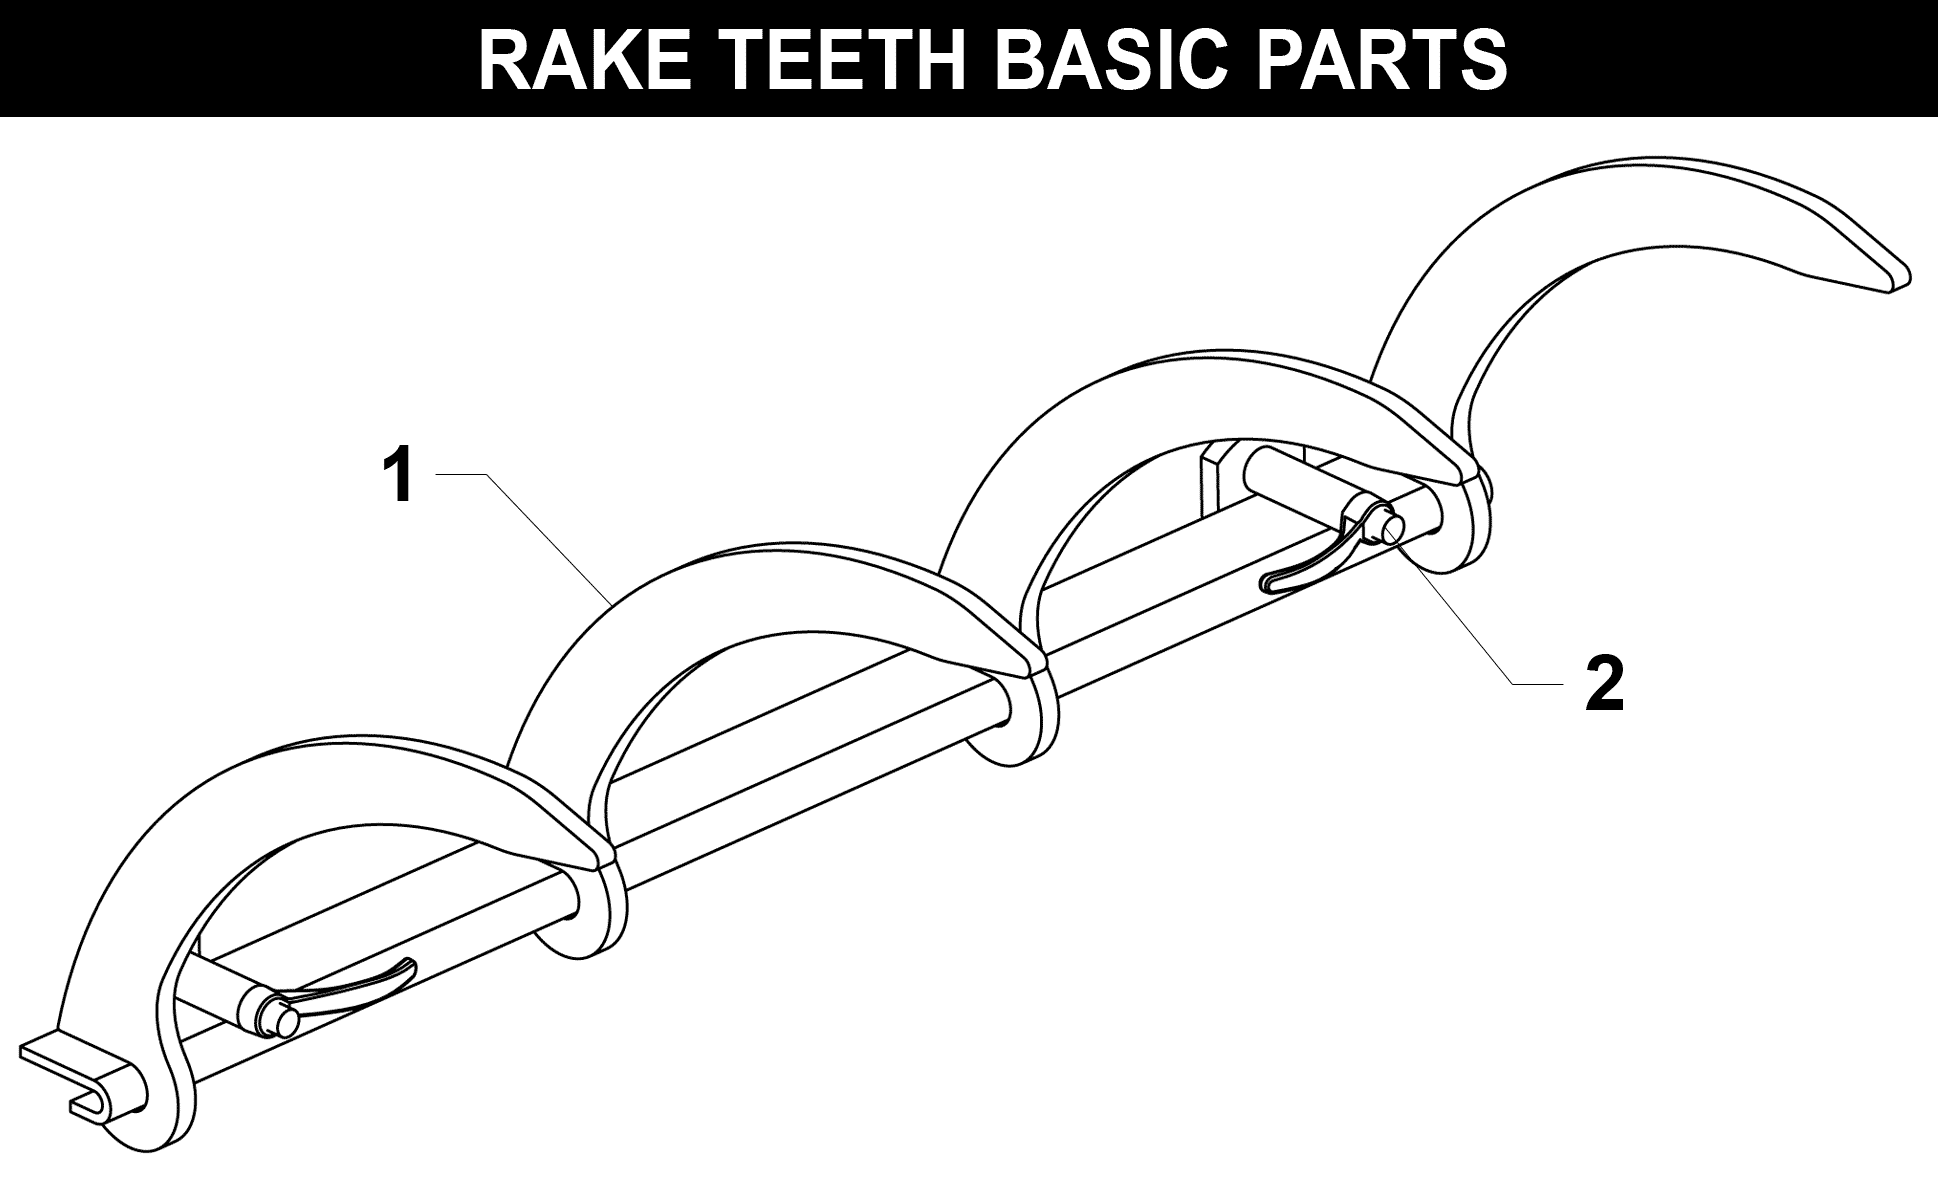 RK-40 Rake Teeth